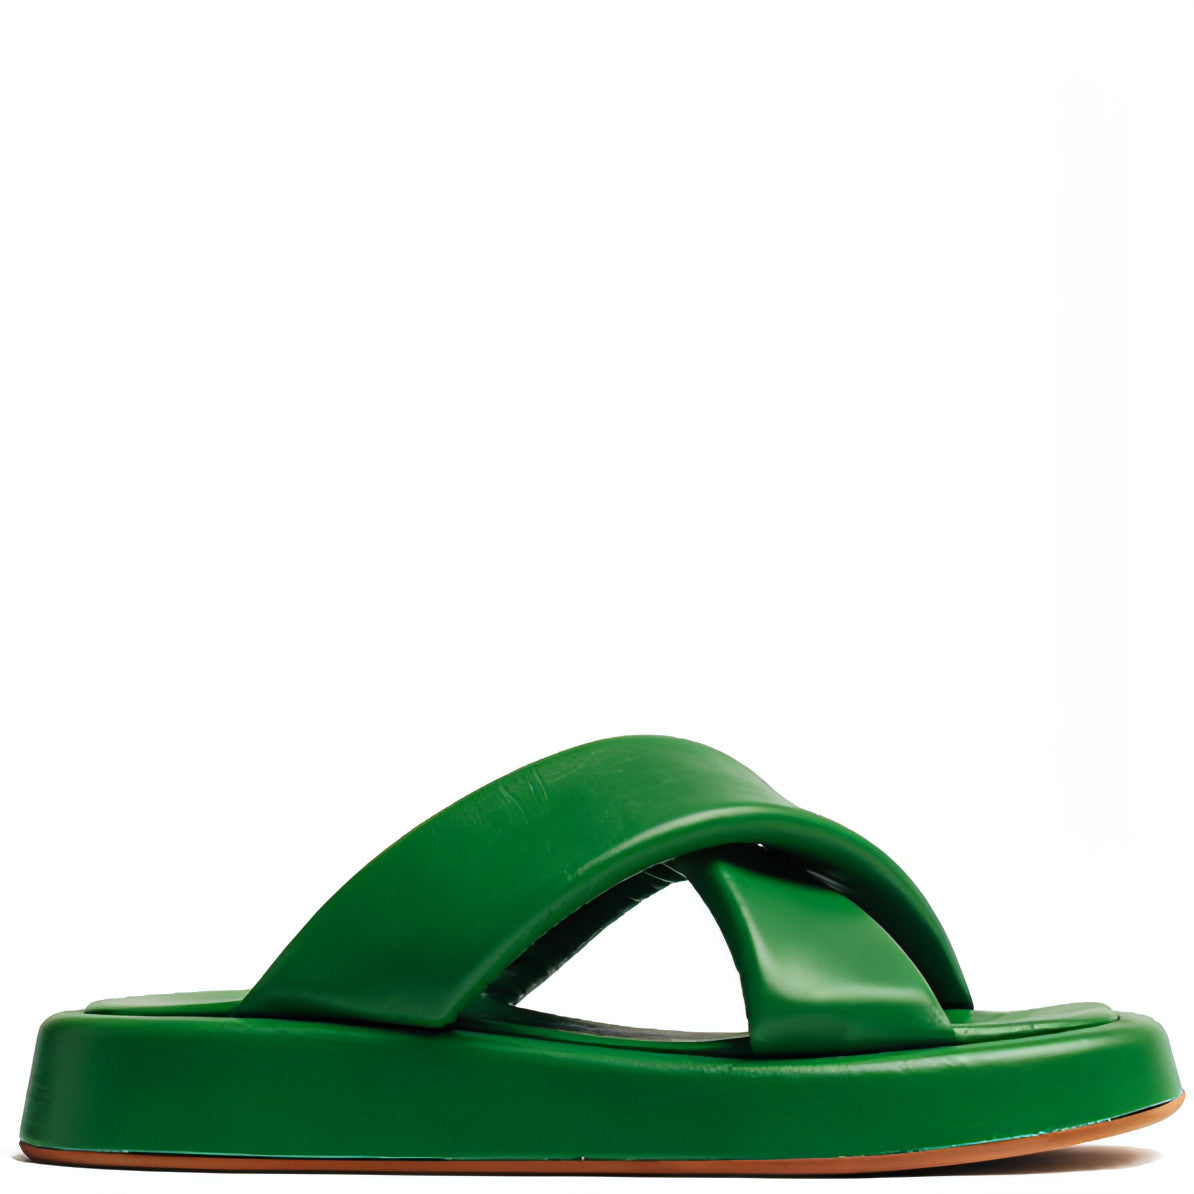 VAMSKO moteriškos žalios šlepetės Pillow slippers